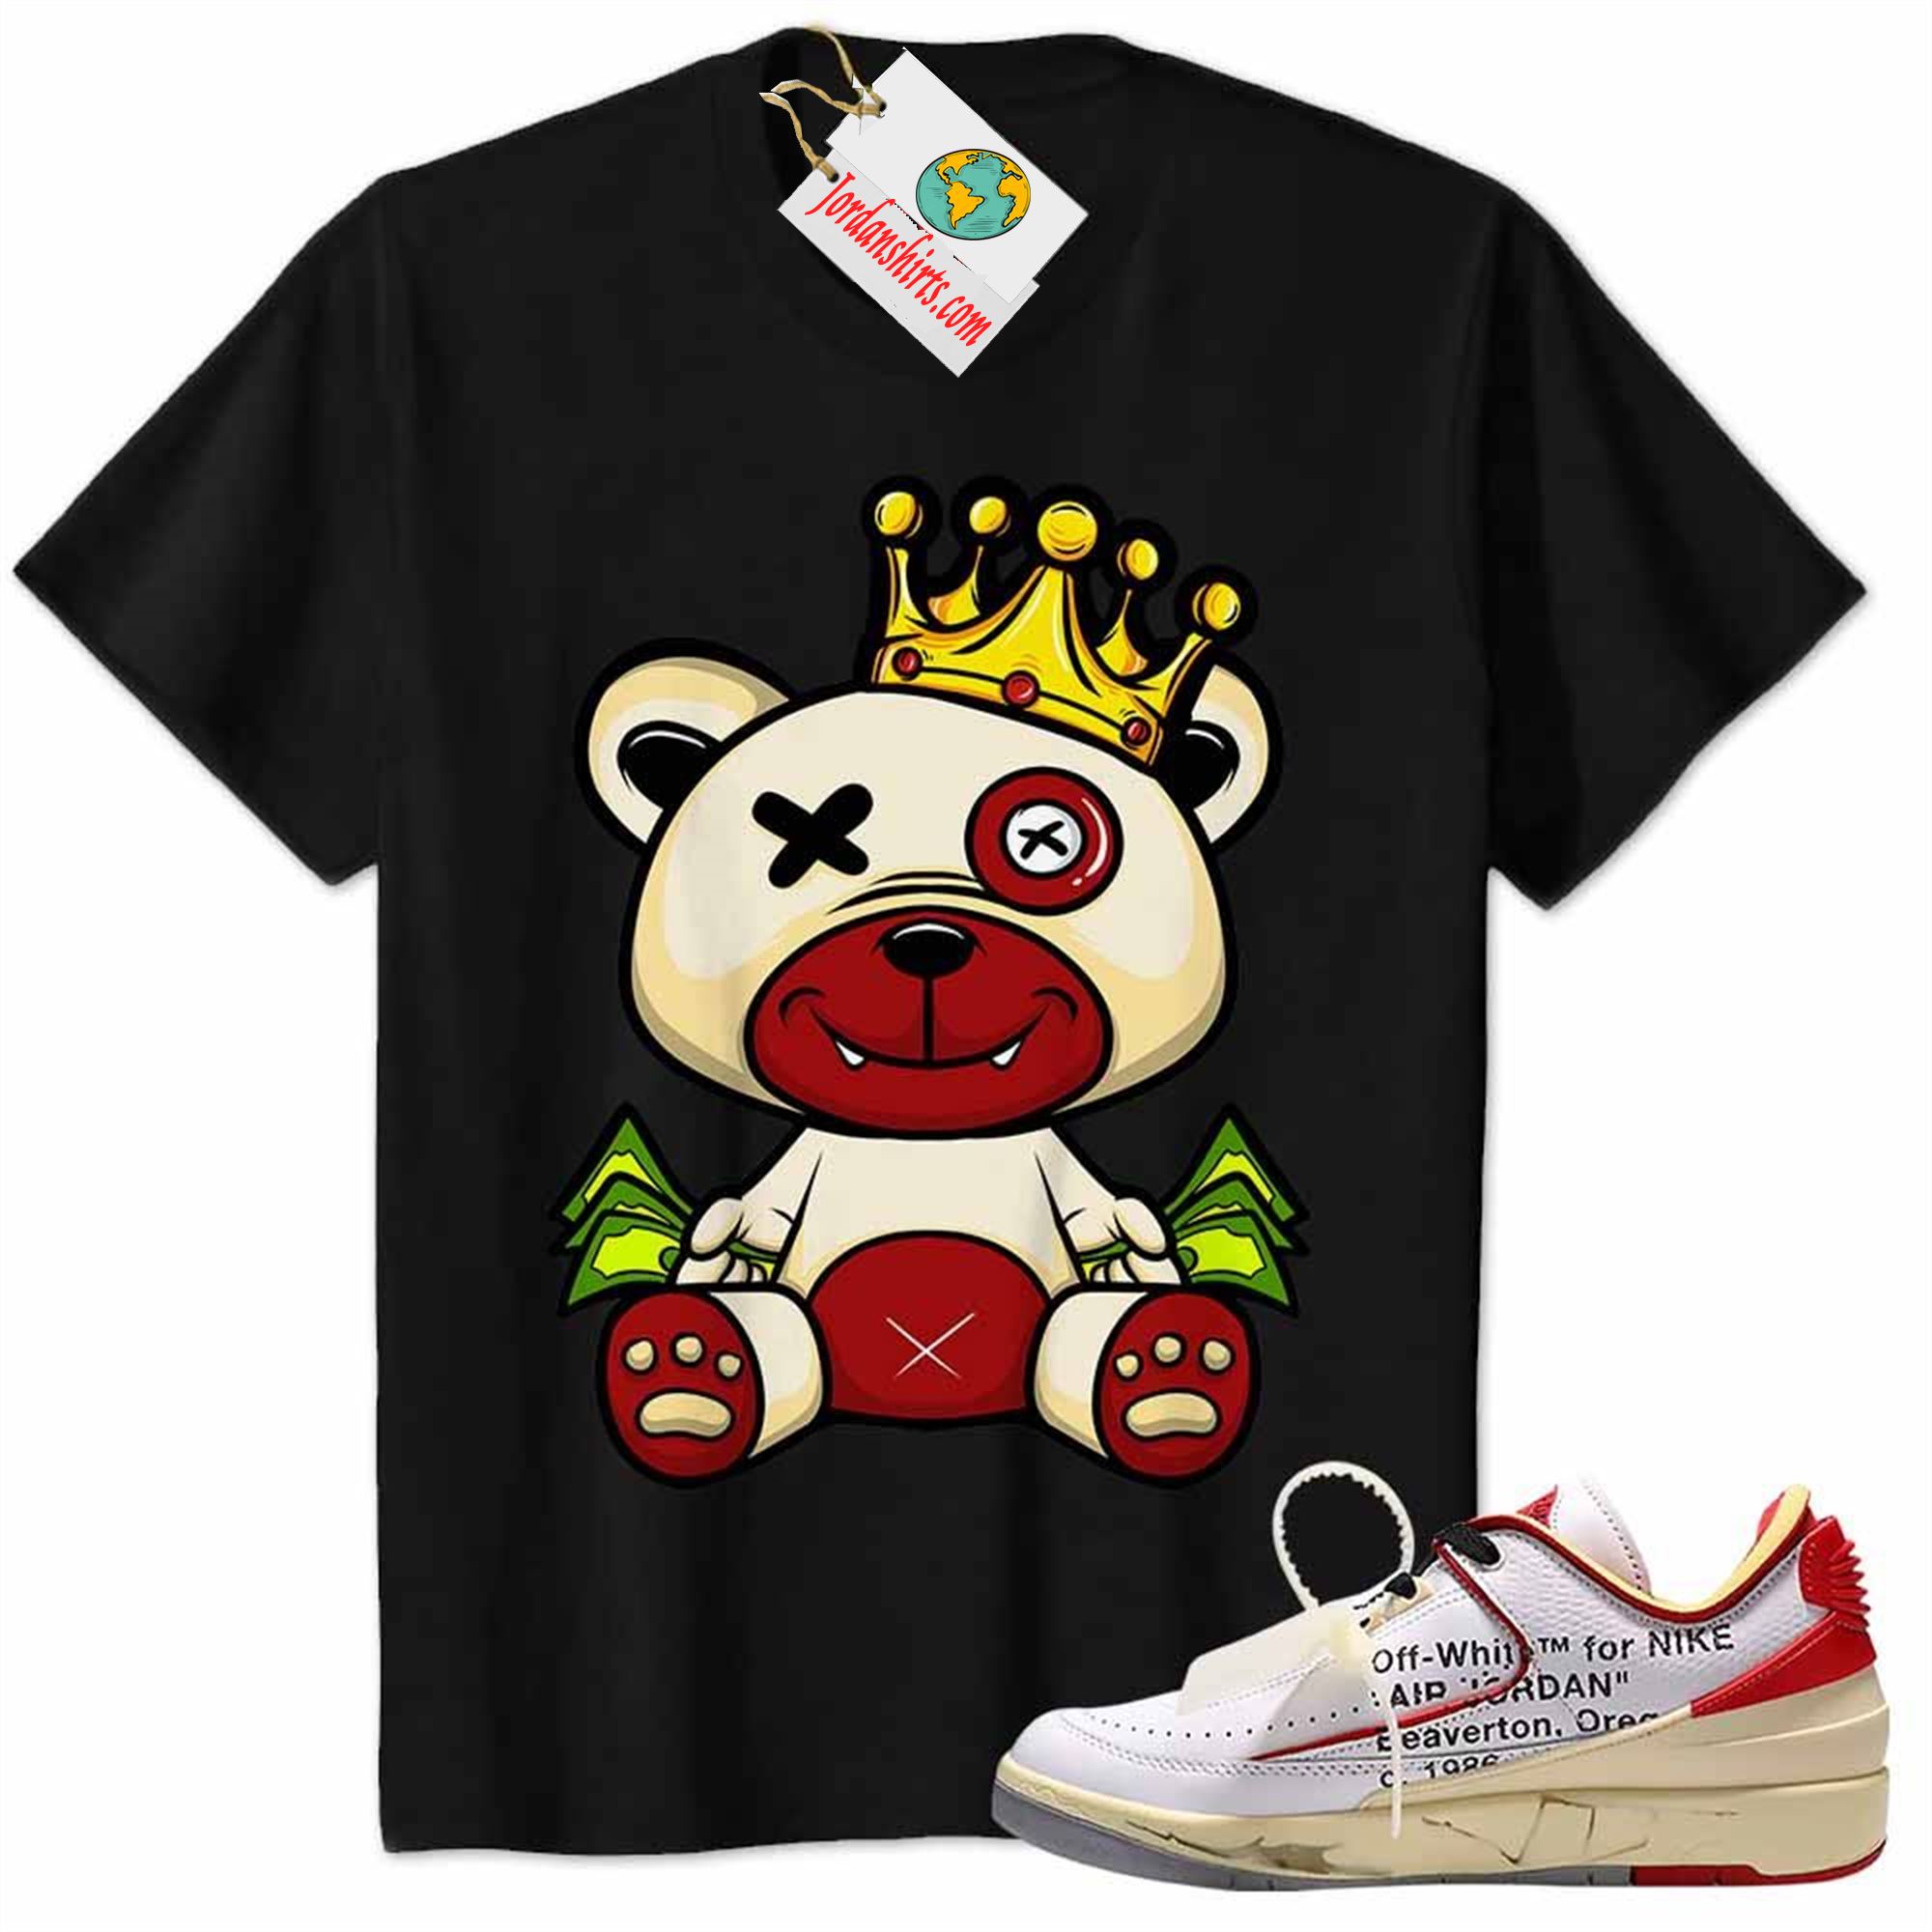 Jordan 2 Shirt, King Teddy Bear Hold Money Black Air Jordan 2 Low White Red Off-white 2s Size Up To 5xl